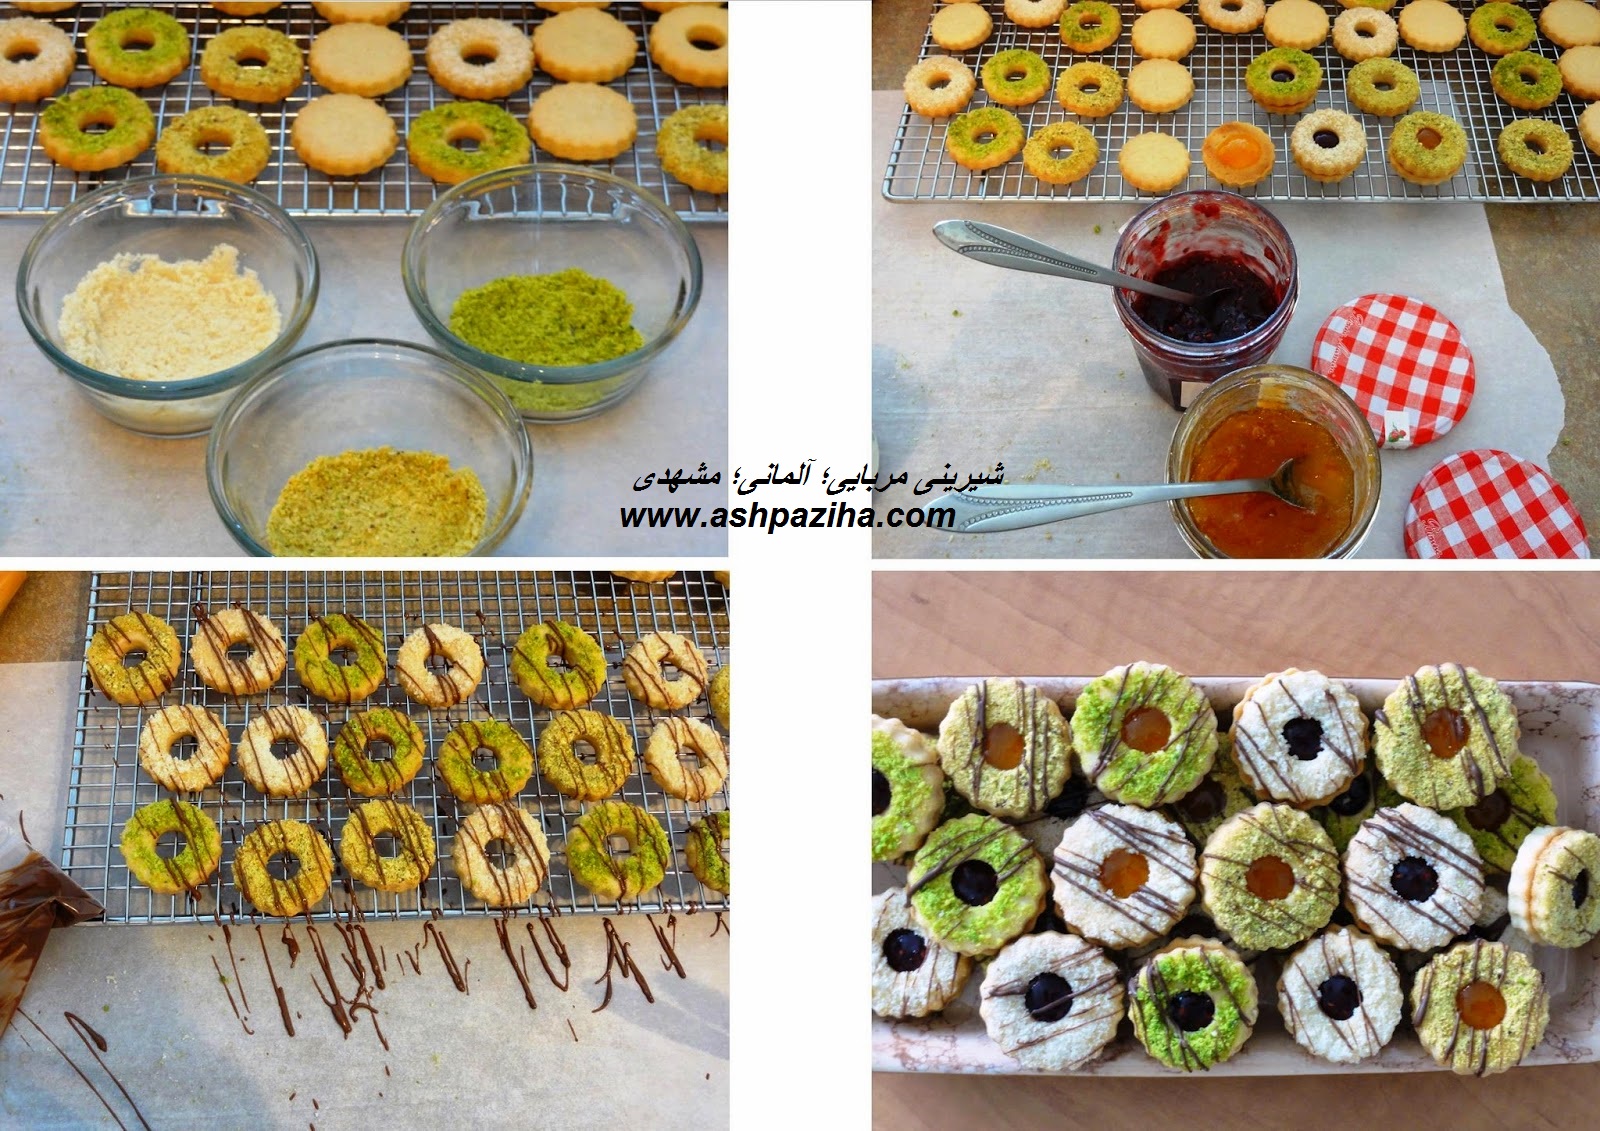 Mode - Preparation - sweets - jam - German - Mashhad (5)